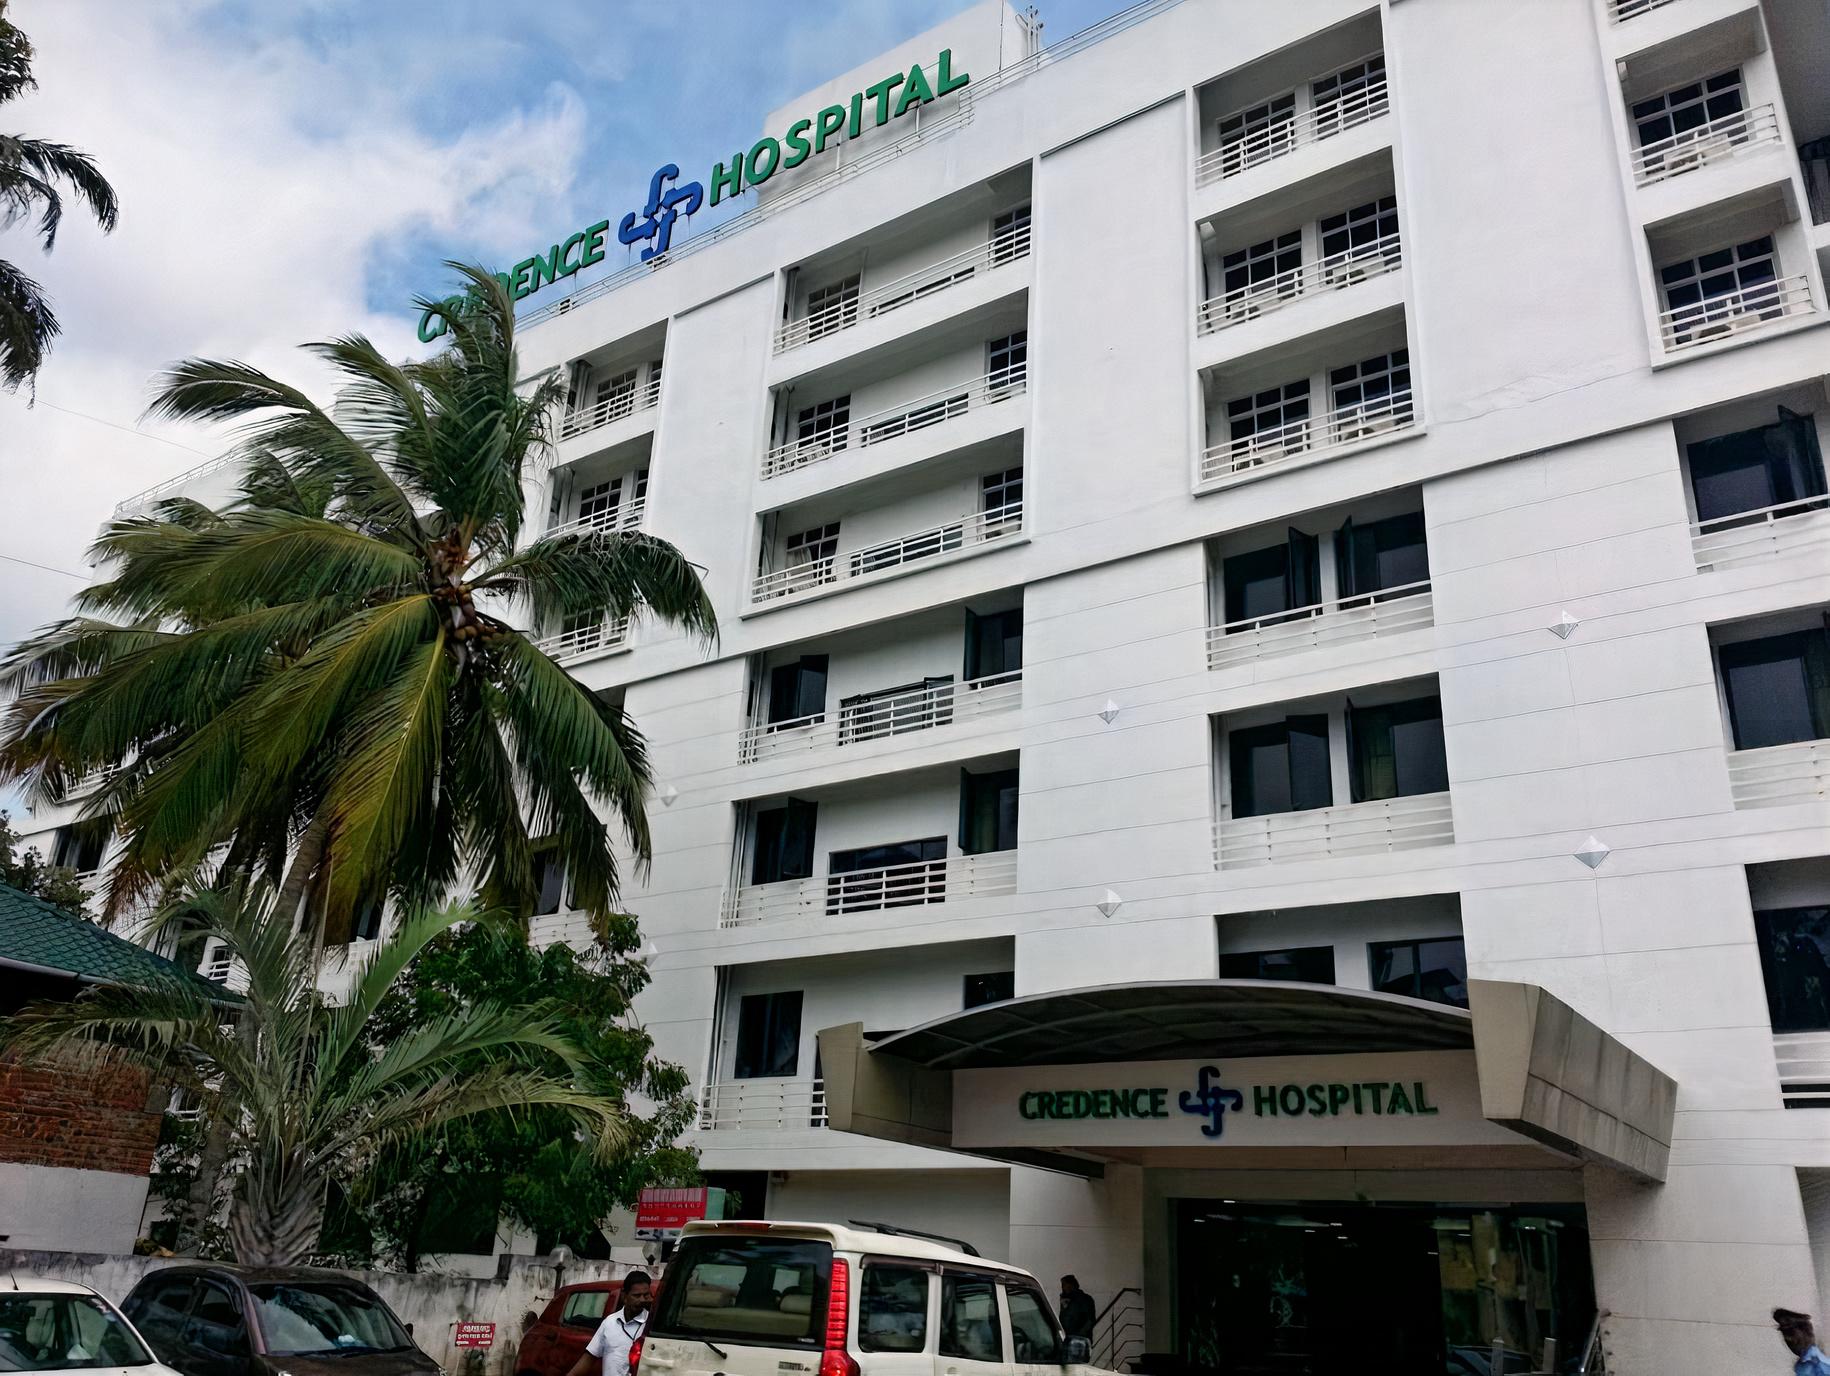 Credence Hospital